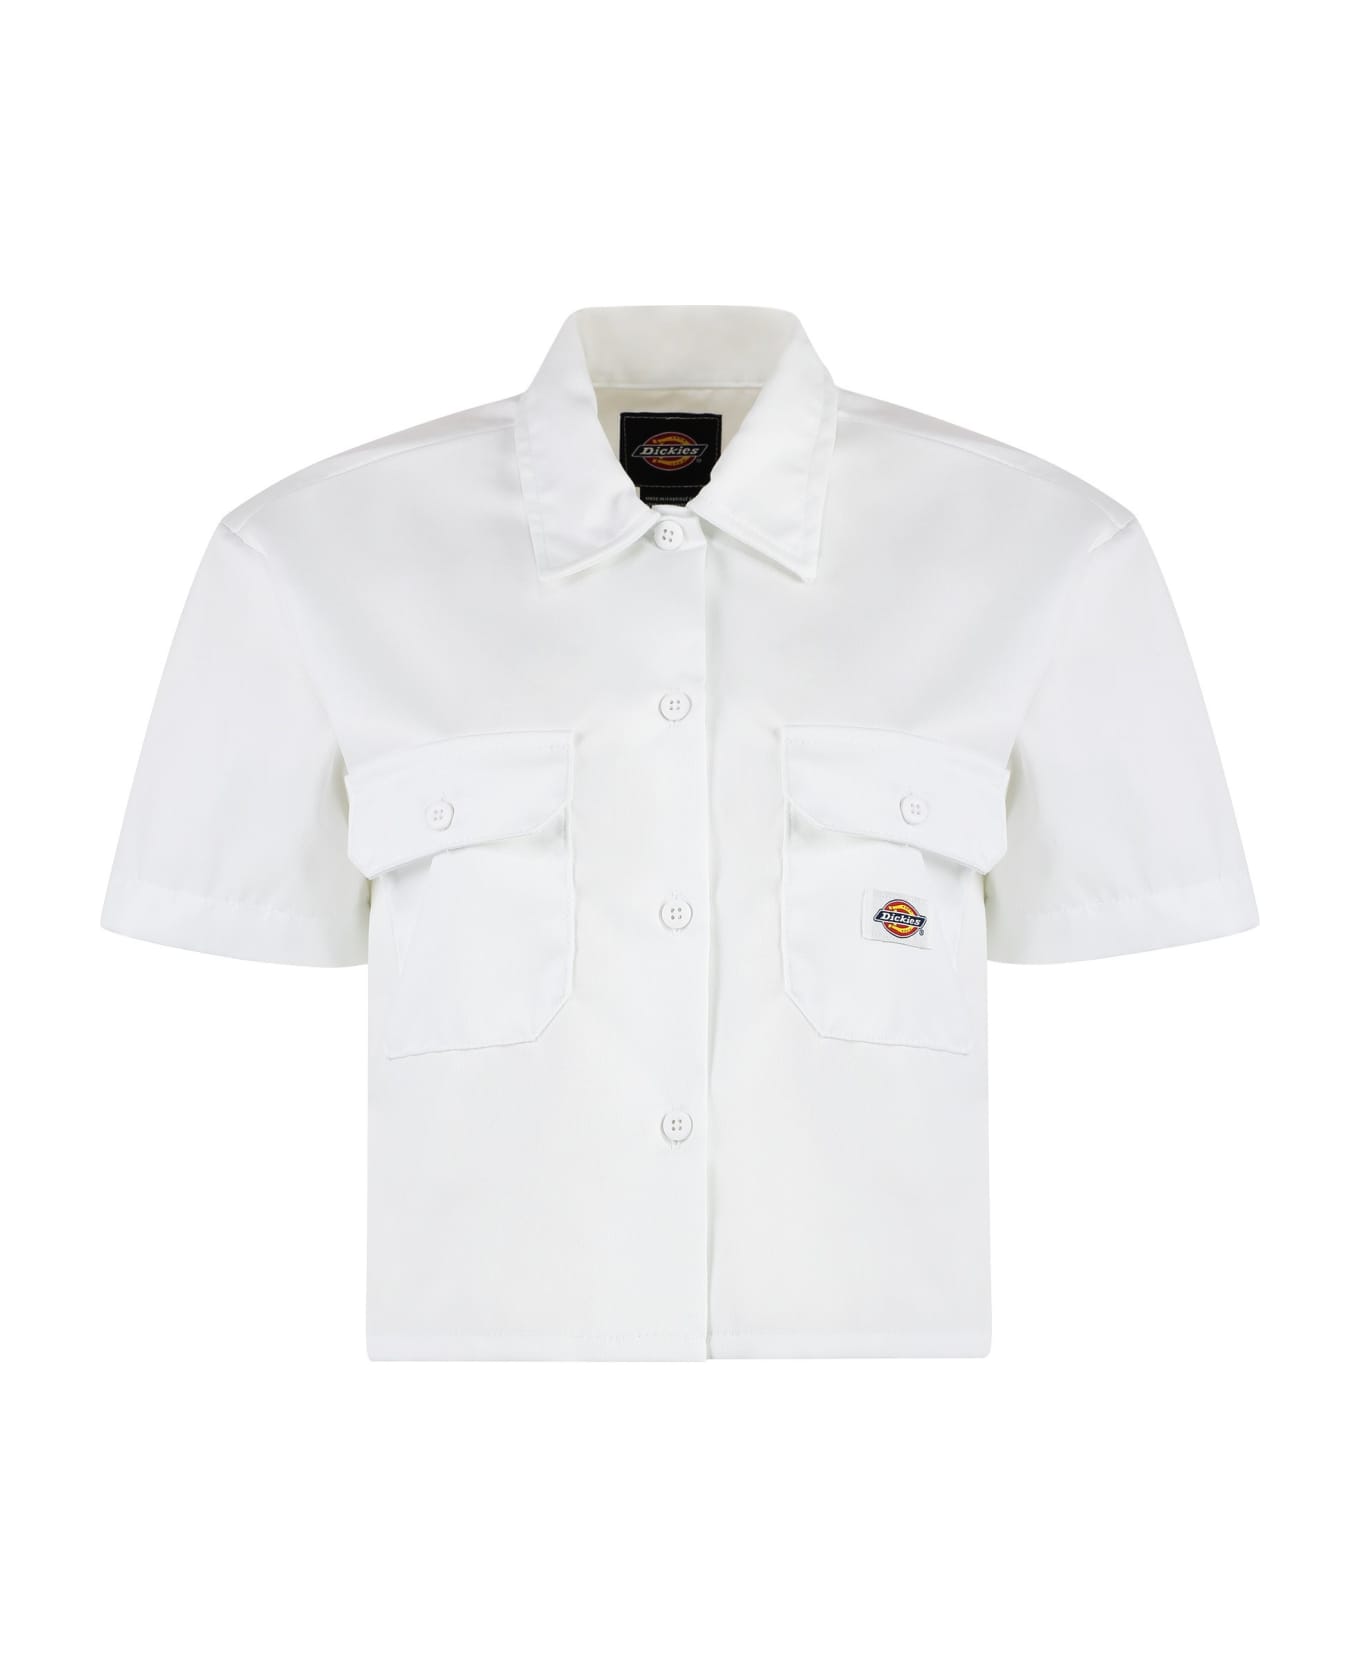 Dickies Short Sleeve Cotton Blend Shirt - White